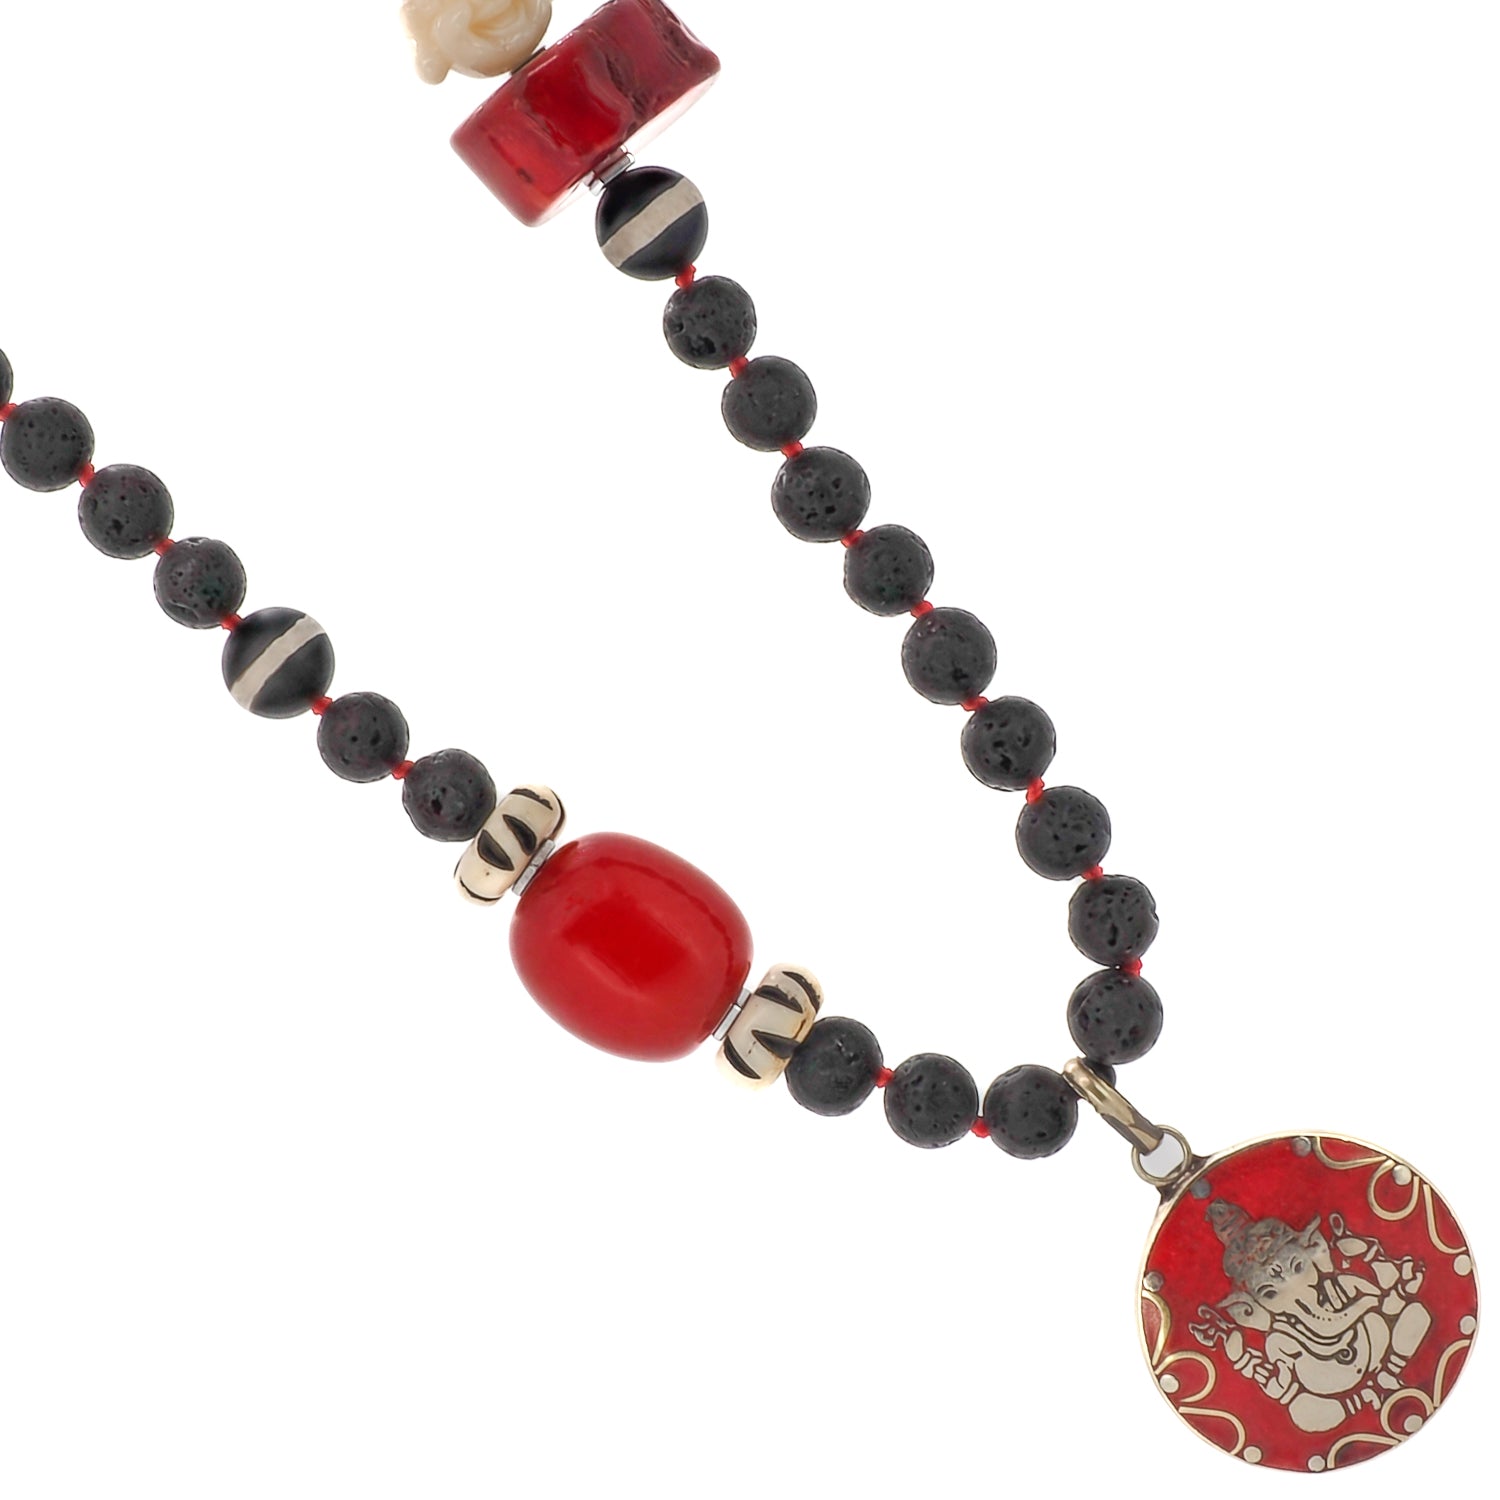 Black Ganesha Necklace with Buddha Bead for Mindfulness